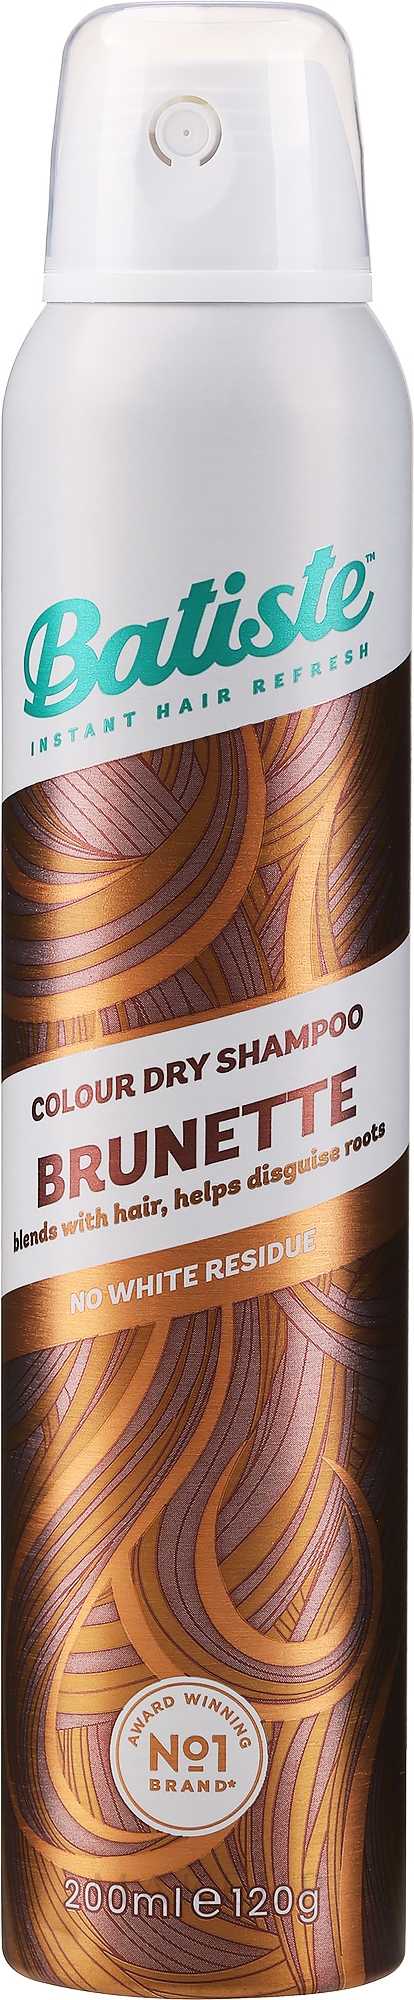 Trockenes Shampoo - Batiste Dry Shampoo Medium and Brunette a Hint of Colour — Foto 200 ml